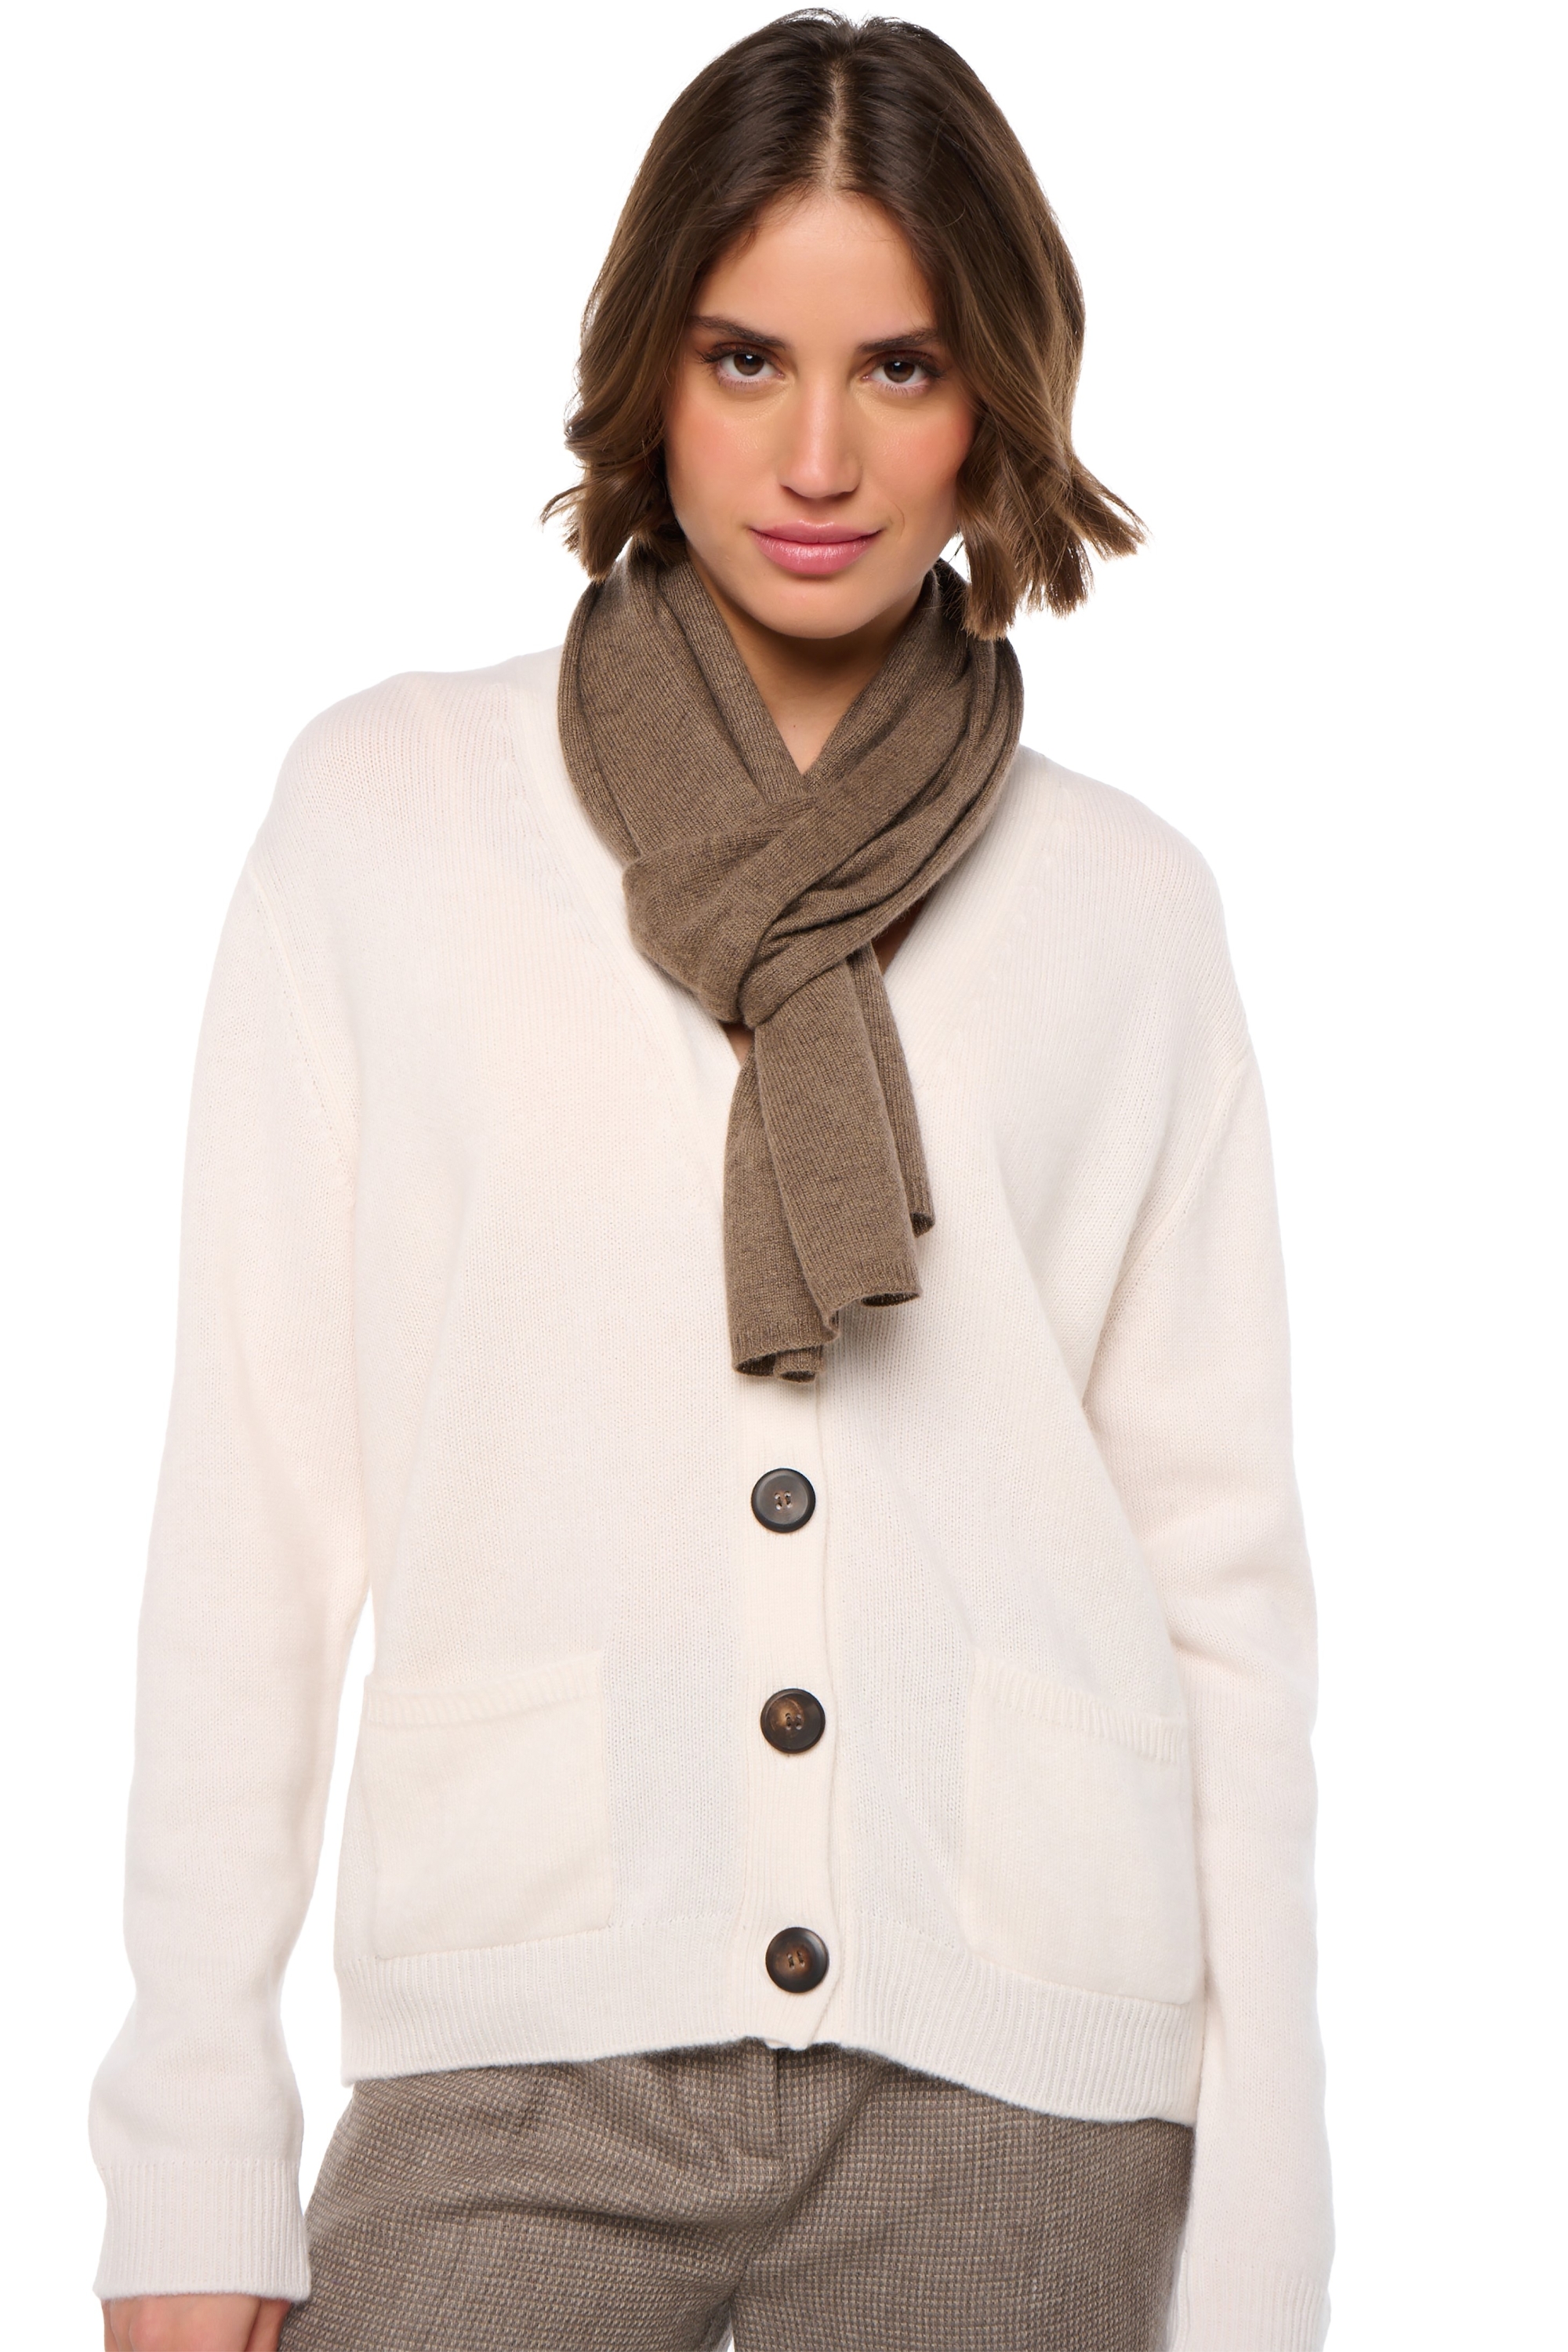 Cashmere accessories scarf mufflers ozone natural dark brown 160 x 30 cm